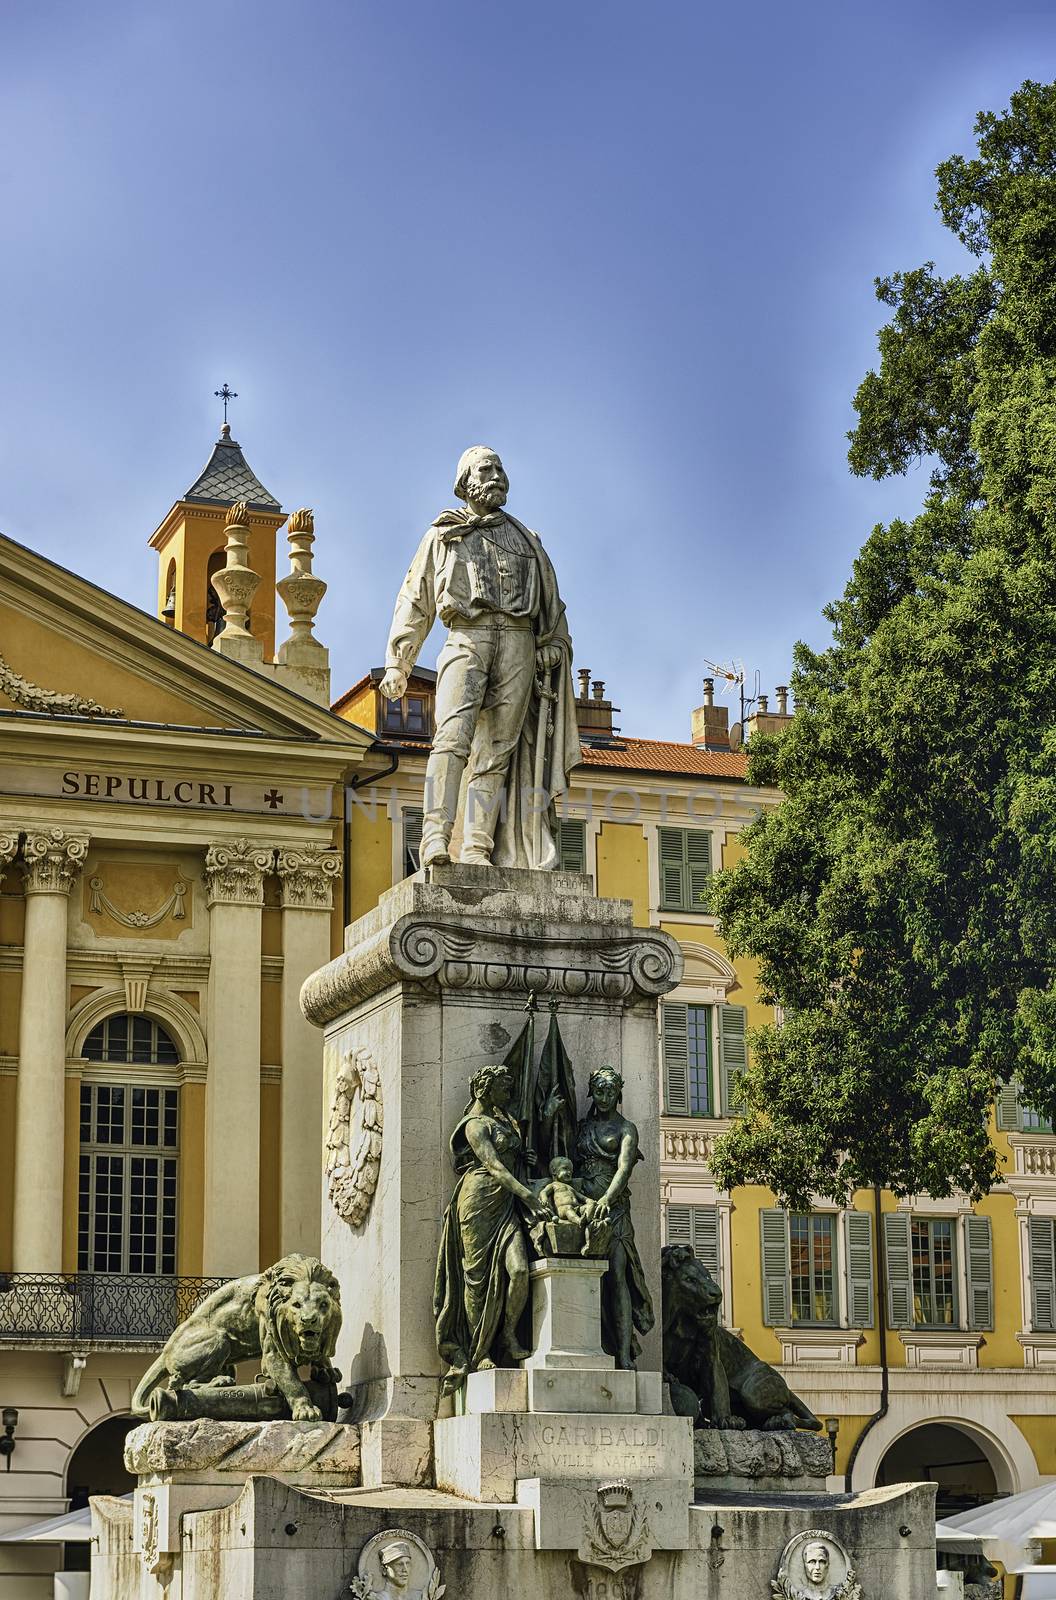 Statue of Garibaldi, in the city centre of Nice, France by marcorubino